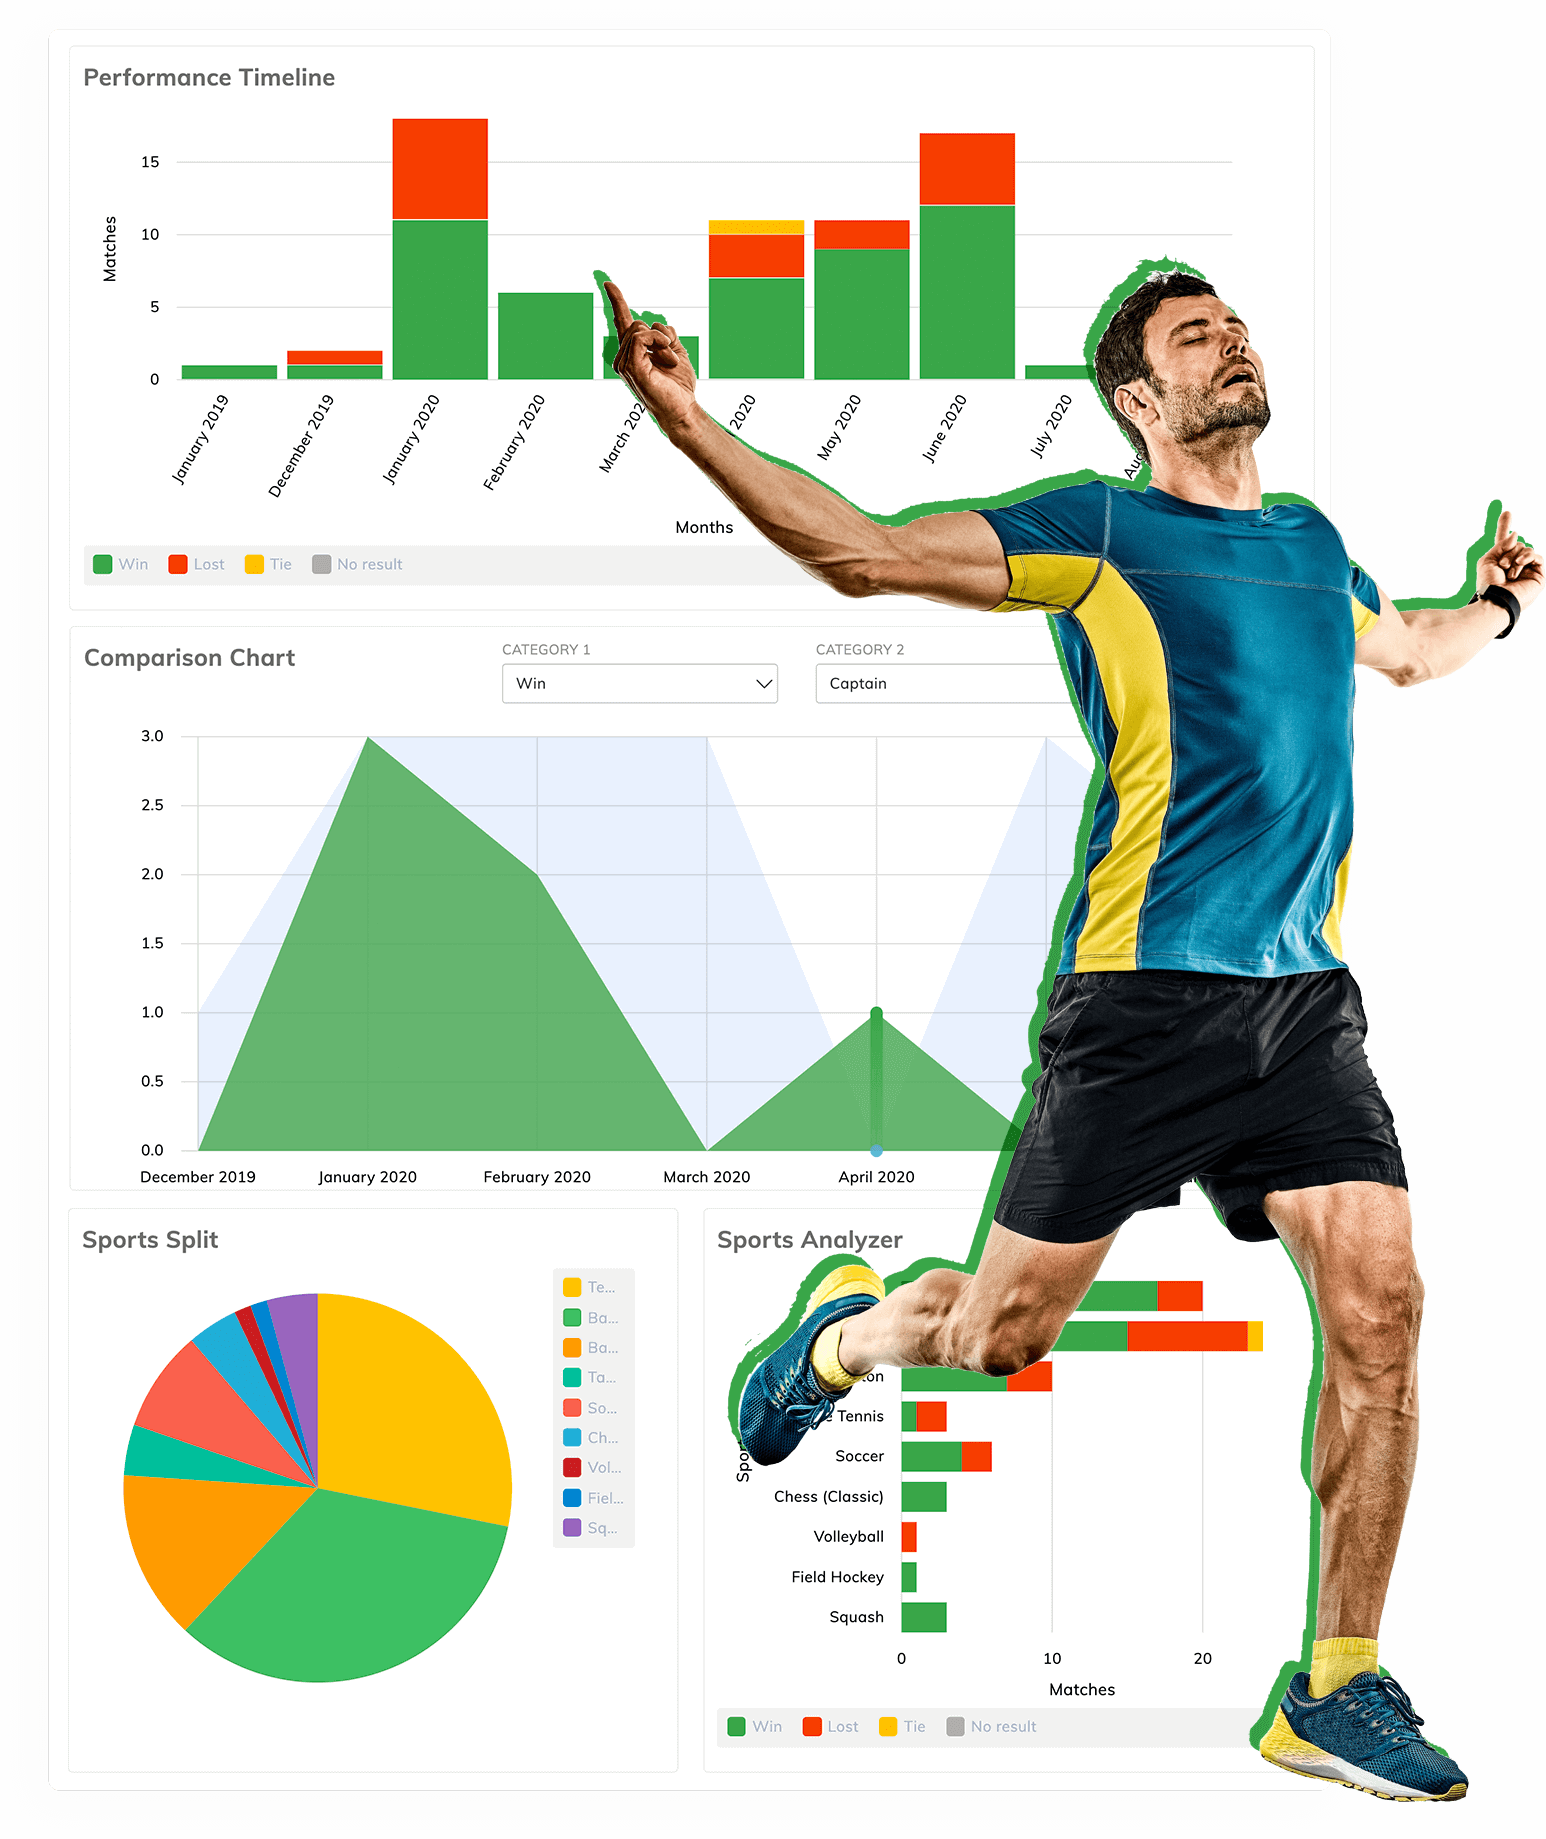 Sport Specific Statistics